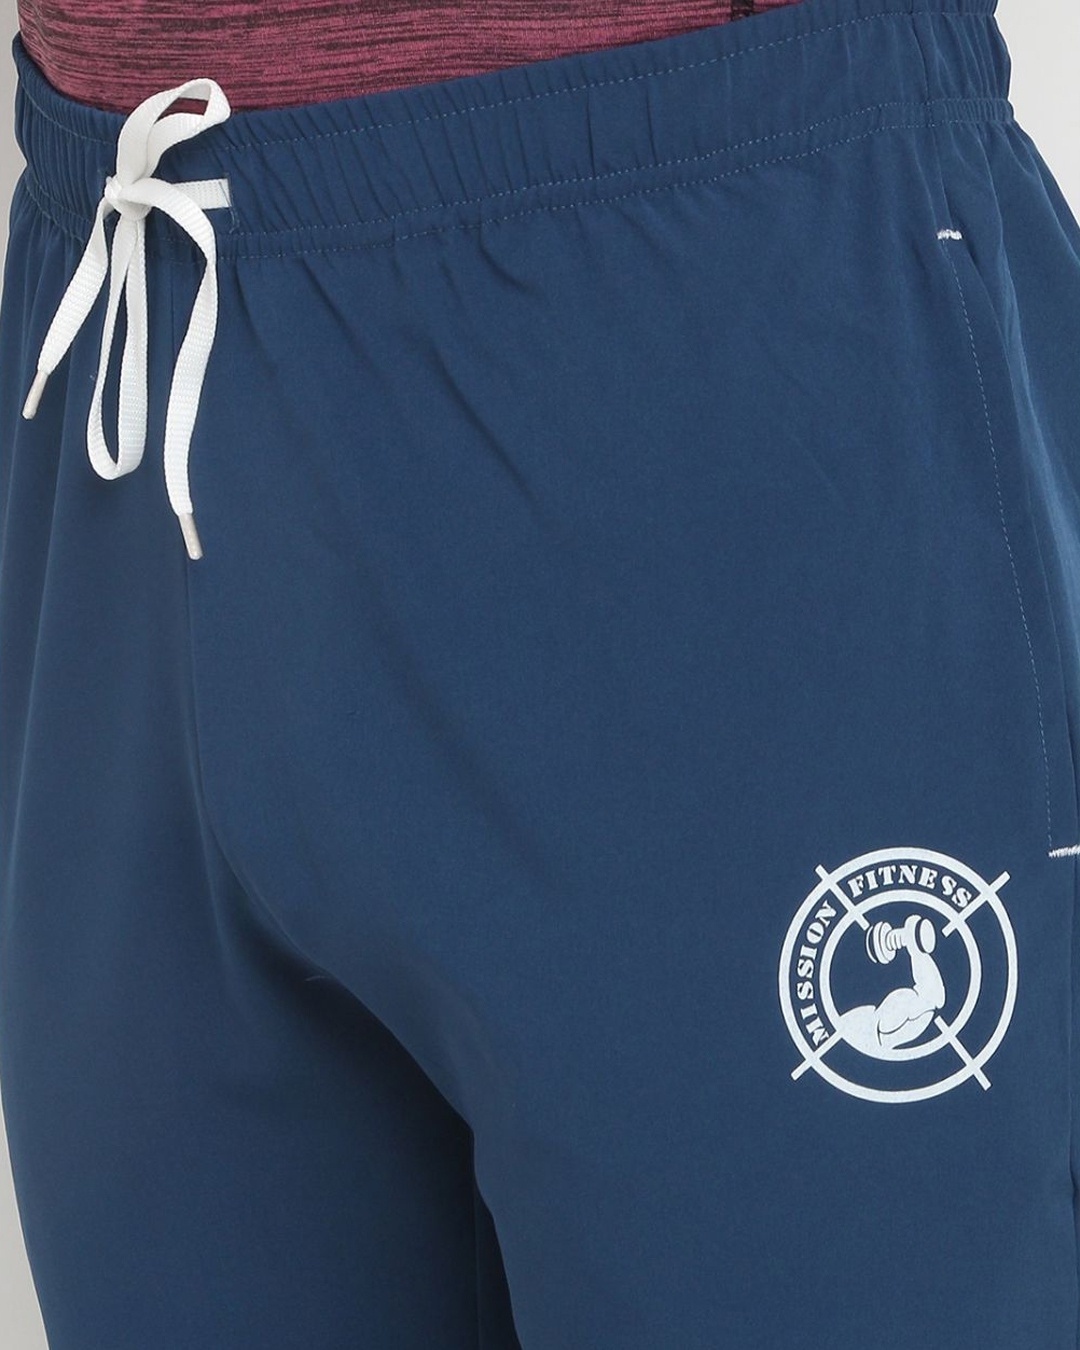 Shop Men's Blue Polyester Track Pants